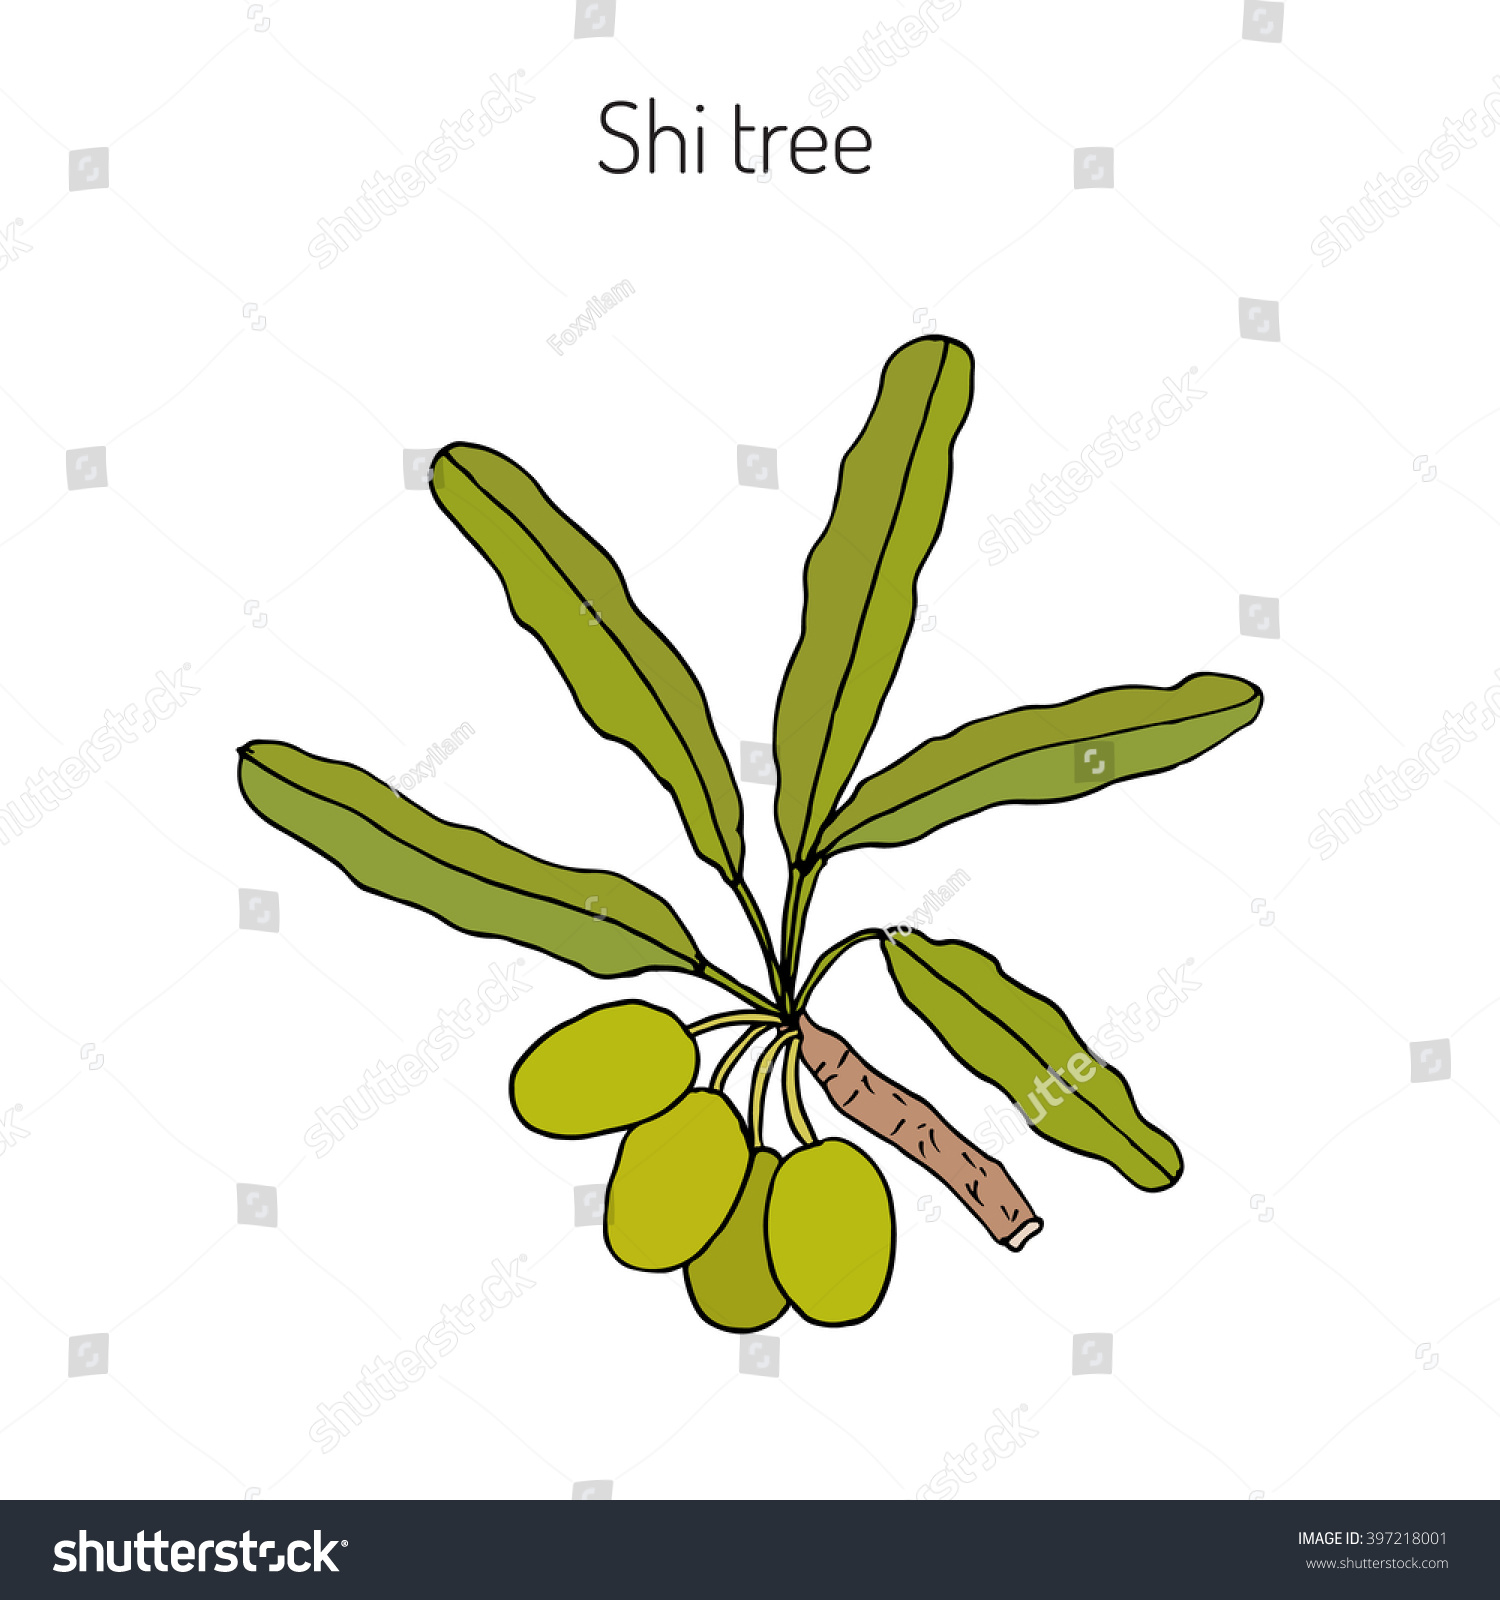 SVG of Shea tree, shi tree, or vitellaria paradoxa. Hand drawn botanical vector illustration svg